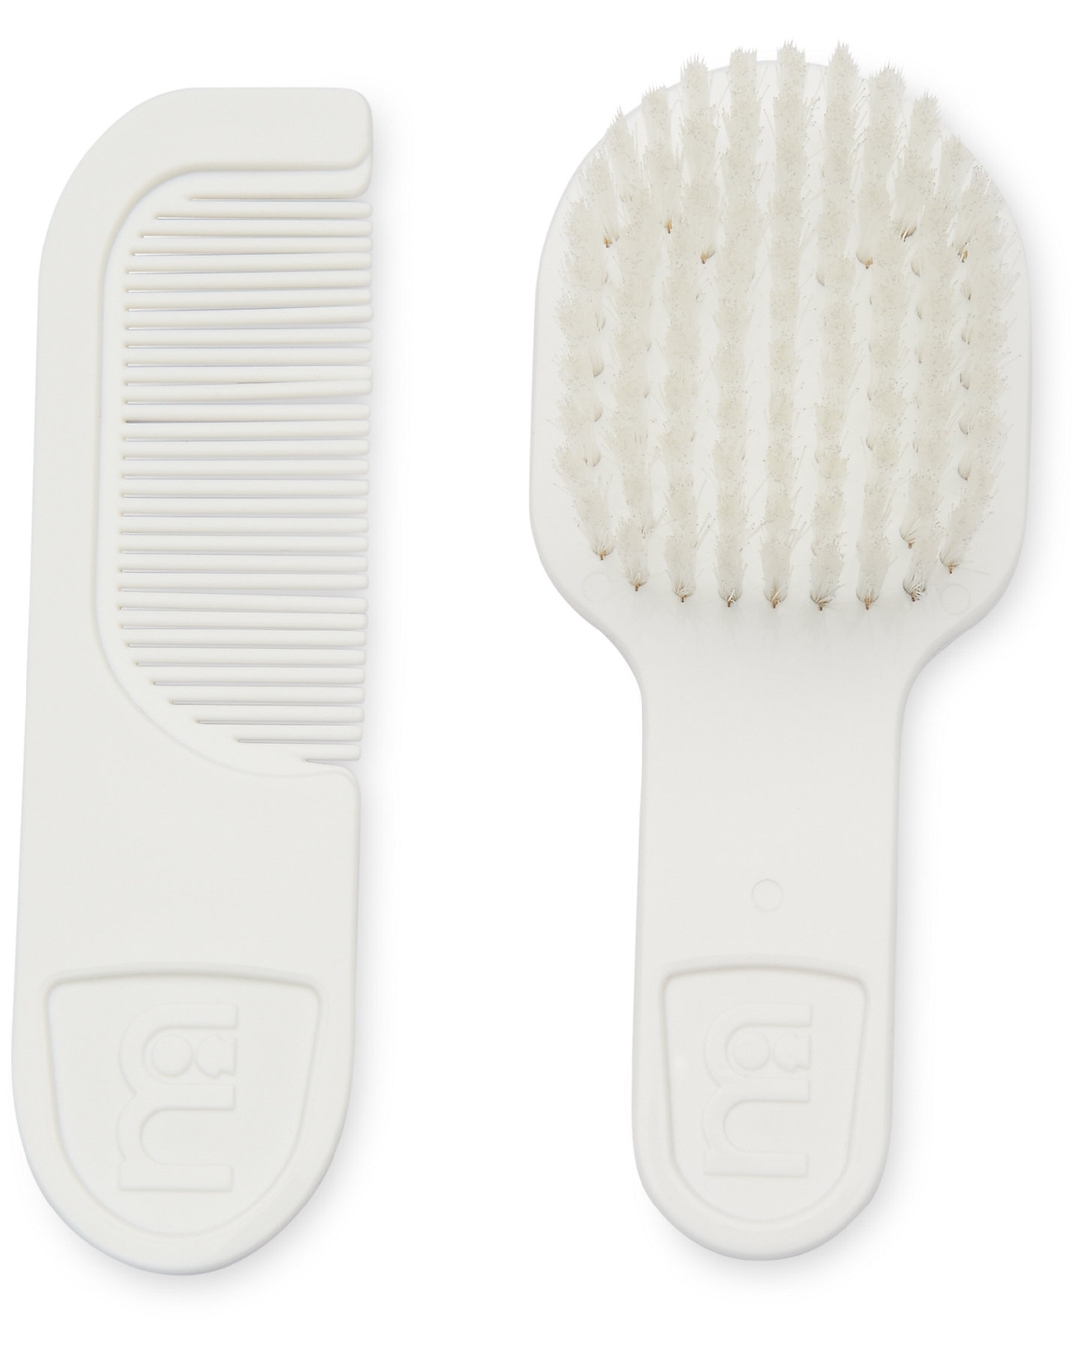 Buy 5 Pieces Hair Brush Set Detangling Brush Paddle Brush Round Hair Brush  Tail Comb Wet Dry Brush for Women Men Hair Styling Blue Online at Low  Prices in India  Amazonin